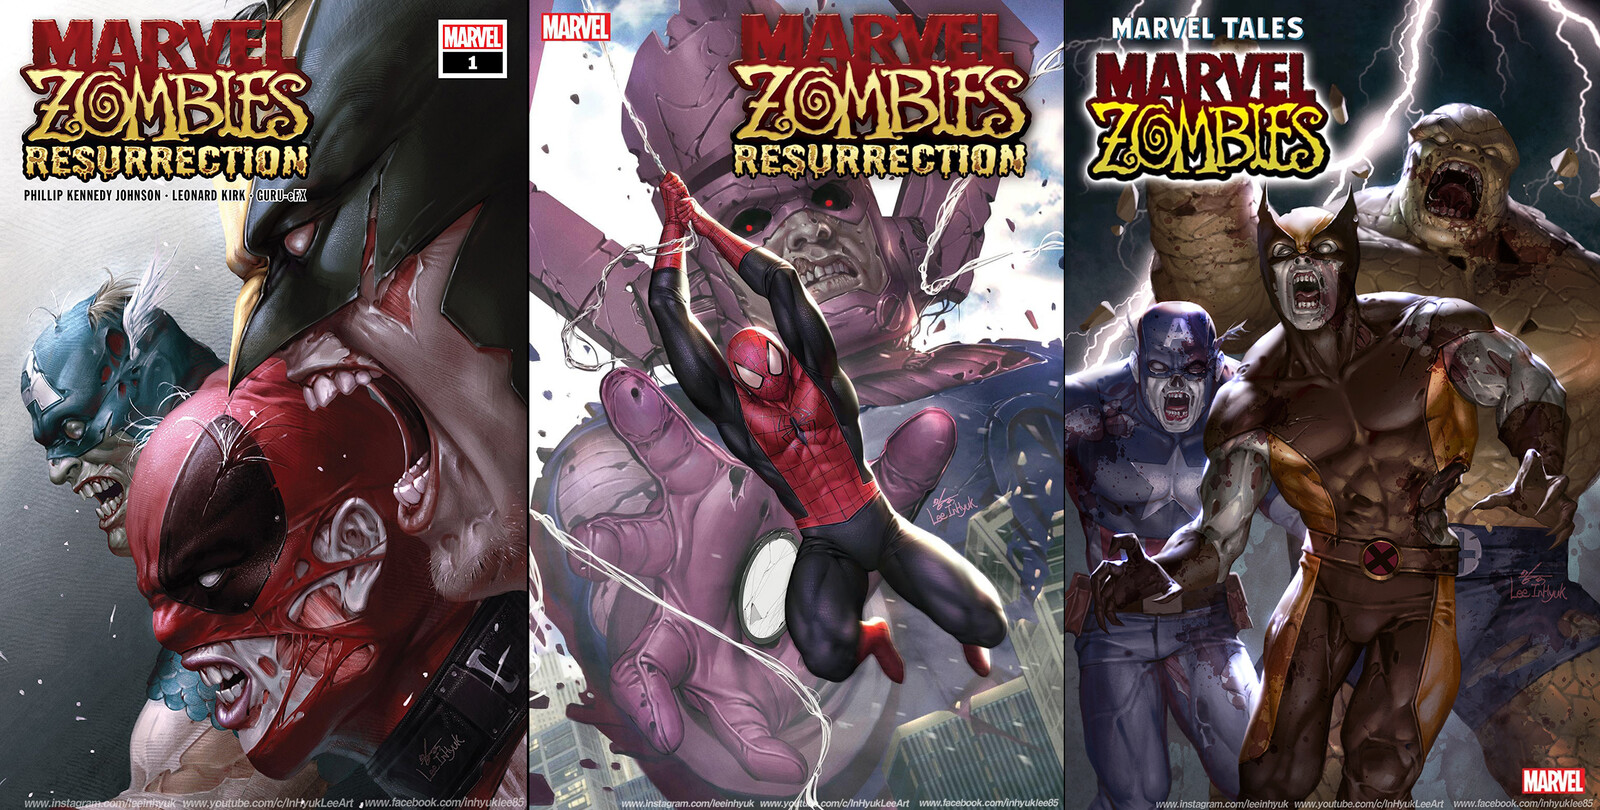 Marvel Zombies series